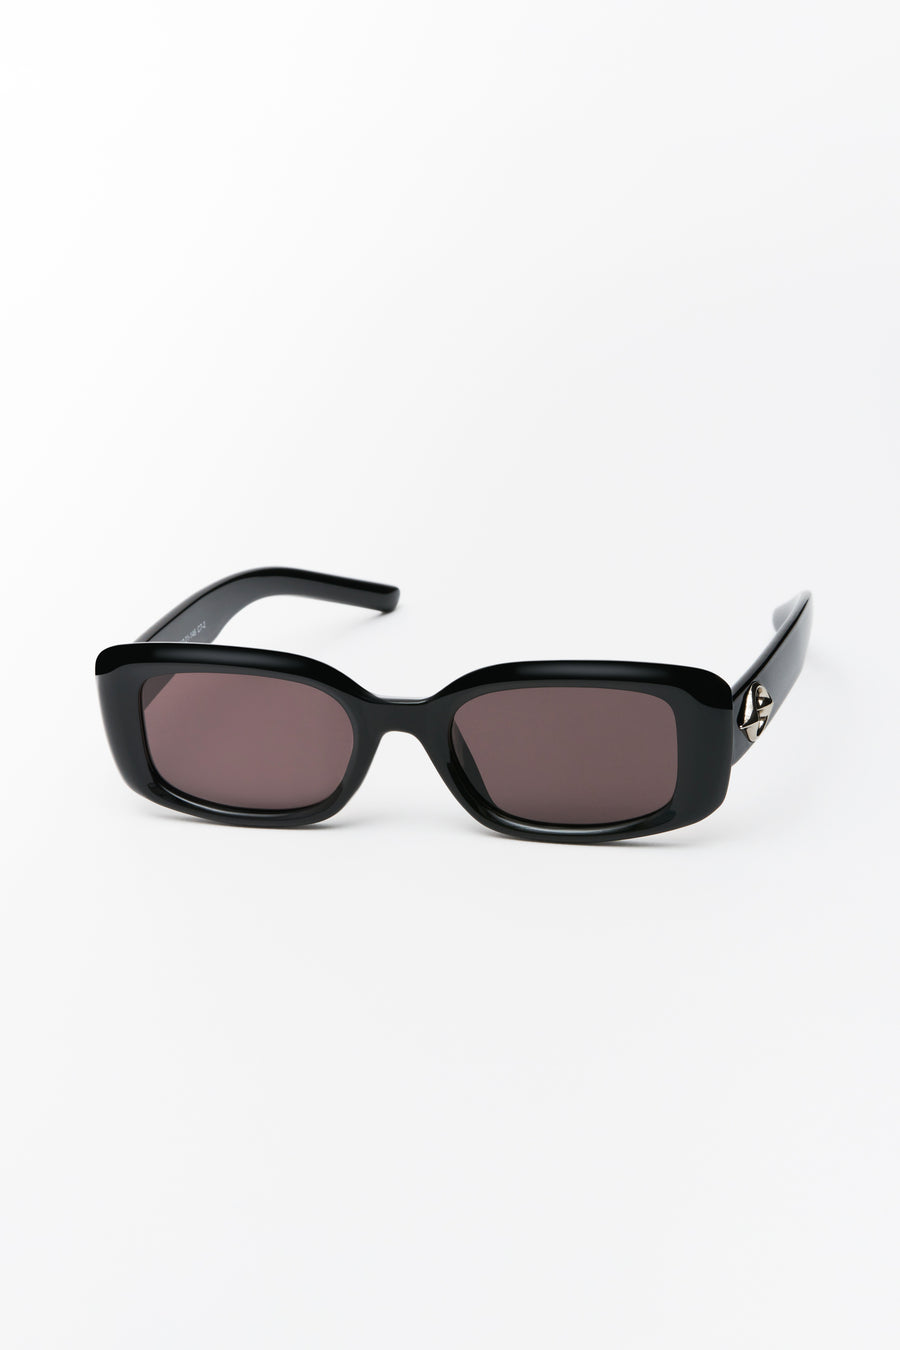 Bobby Sunglasses Black/Chai Lens